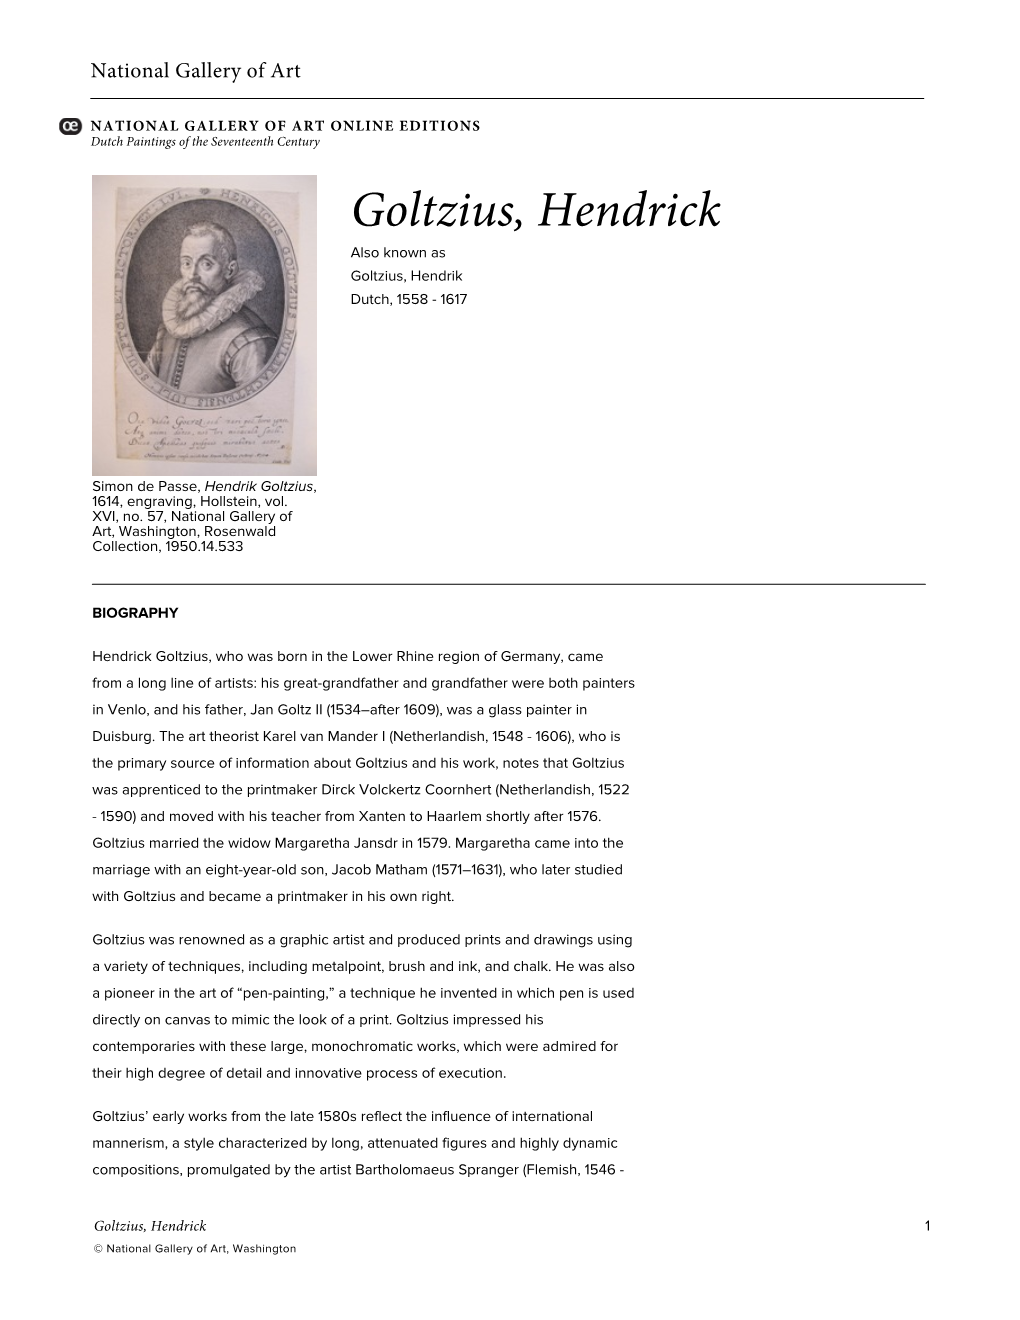 Goltzius, Hendrick Also Known As Goltzius, Hendrik Dutch, 1558 - 1617